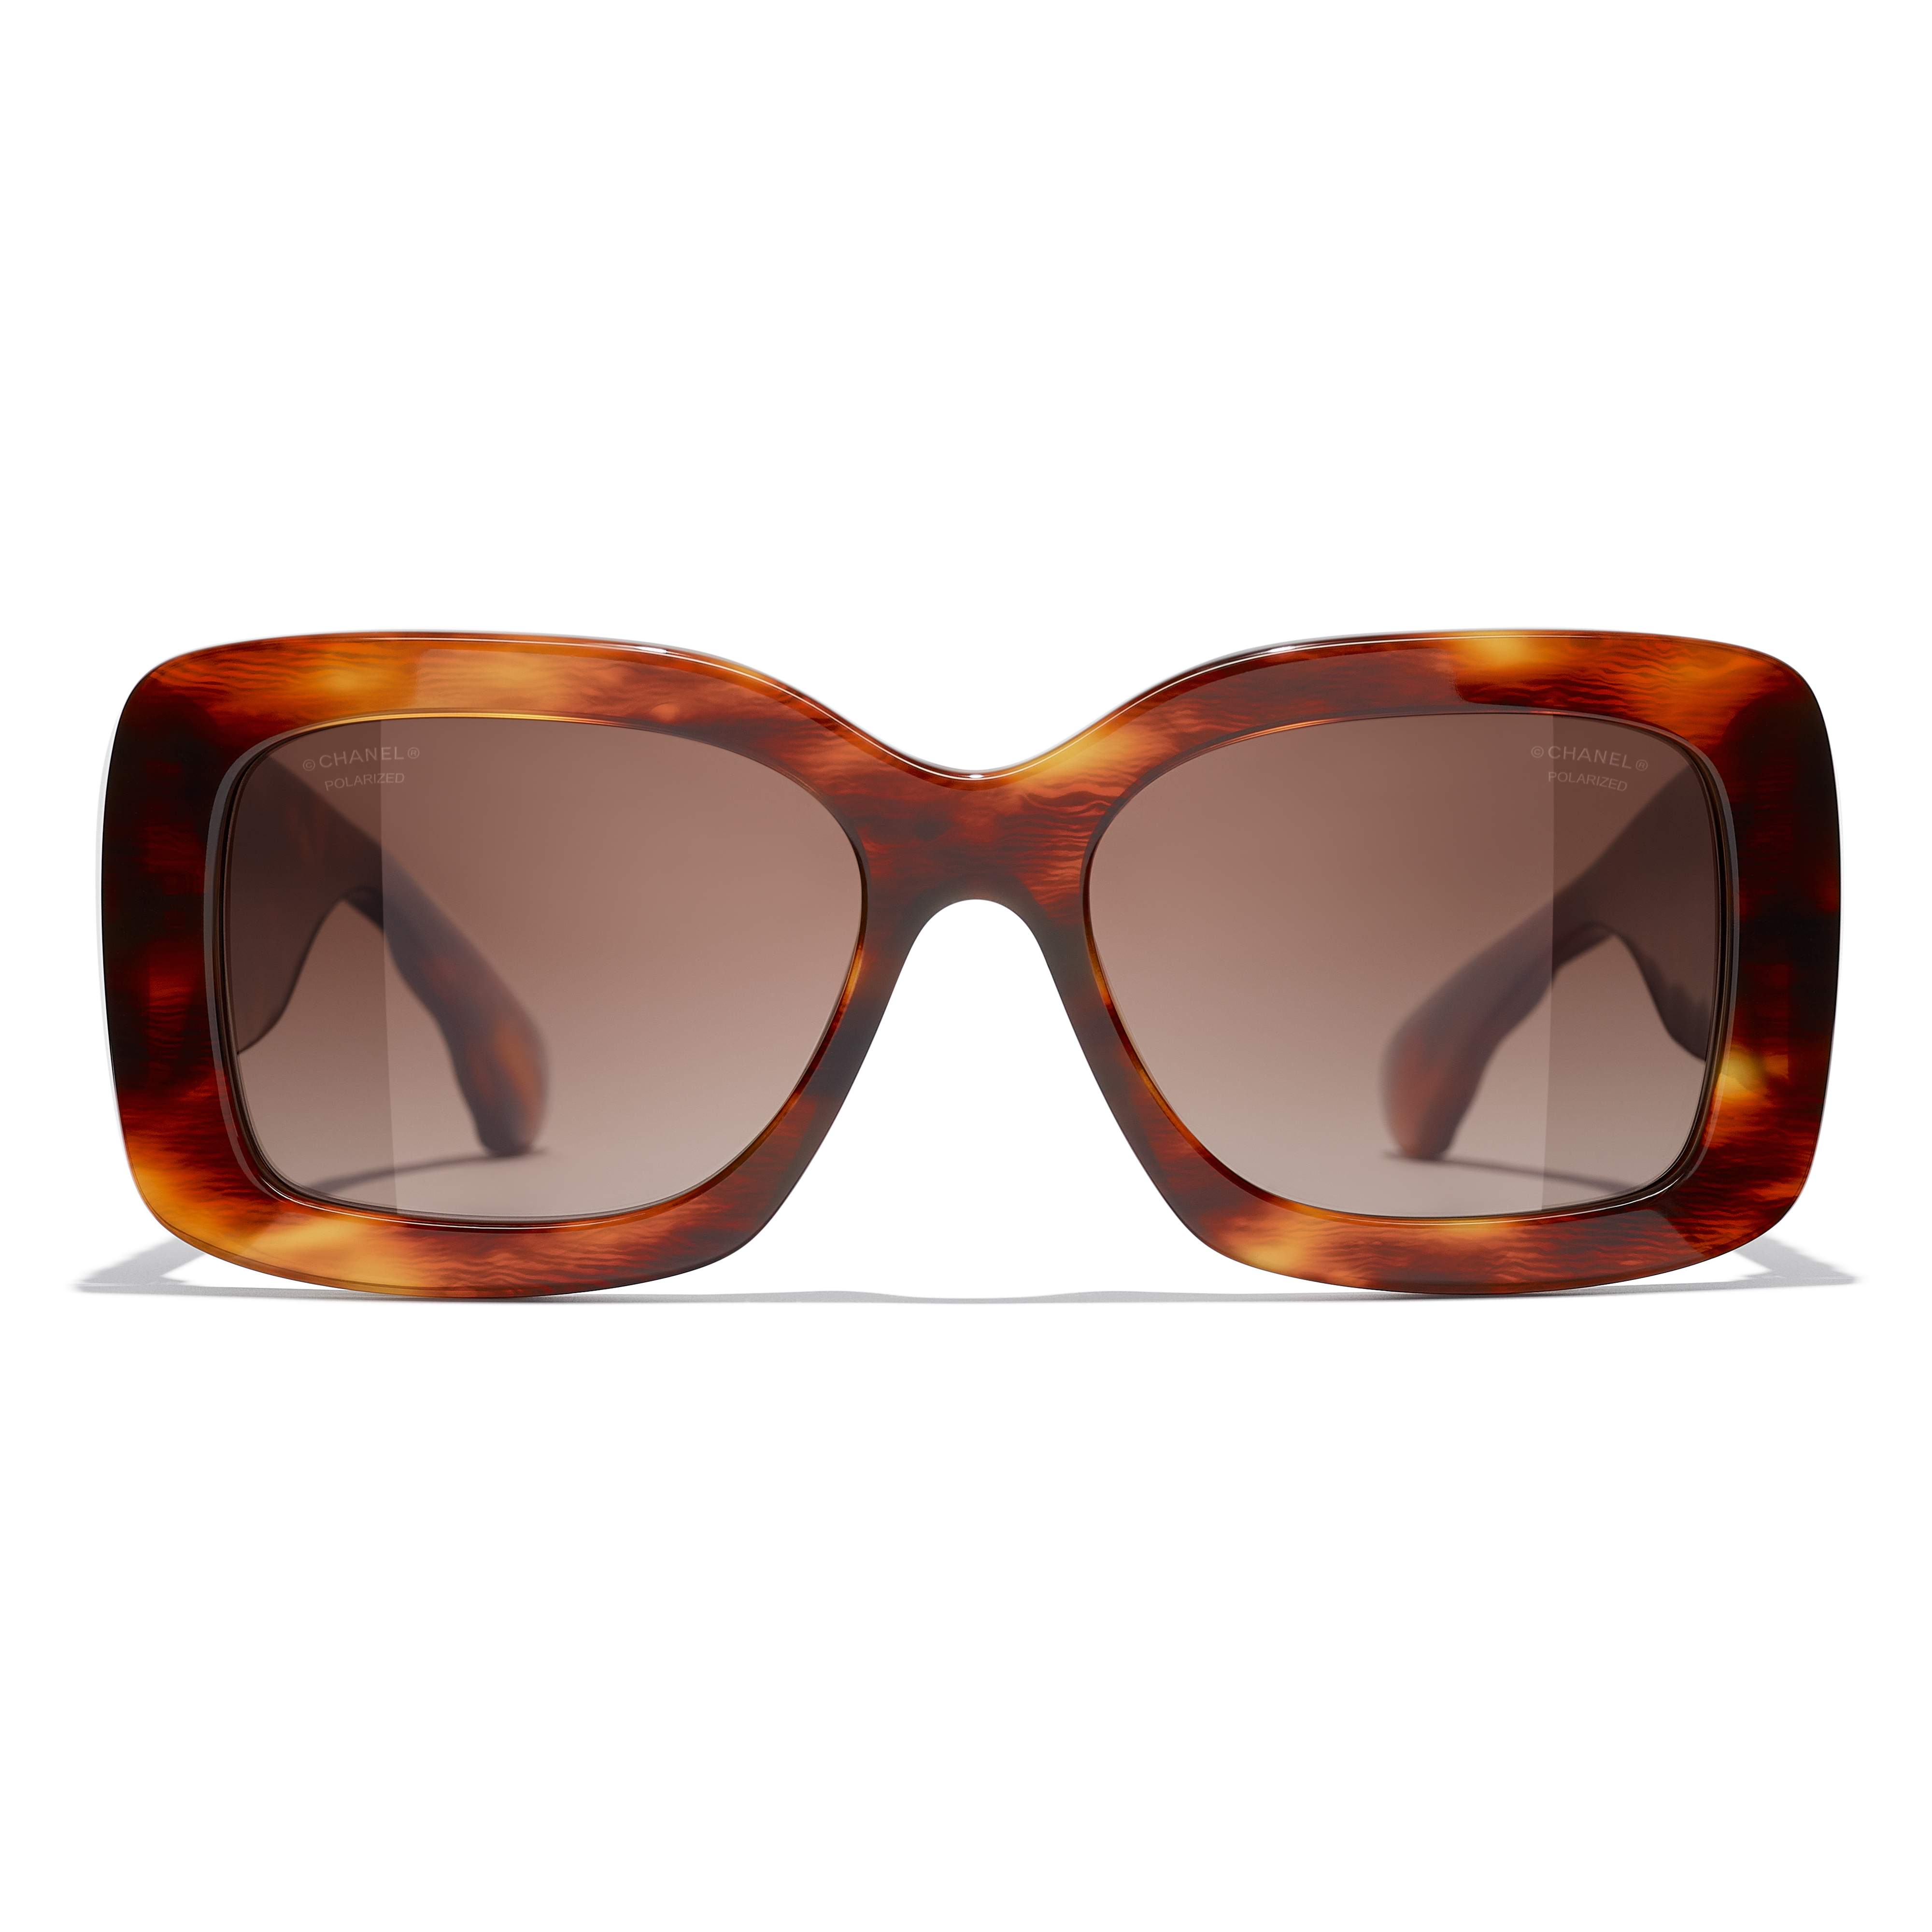 Sunglasses CHANEL CH5483 1077/S9 54-17 Striped Havana in stock, Price  283,33 €